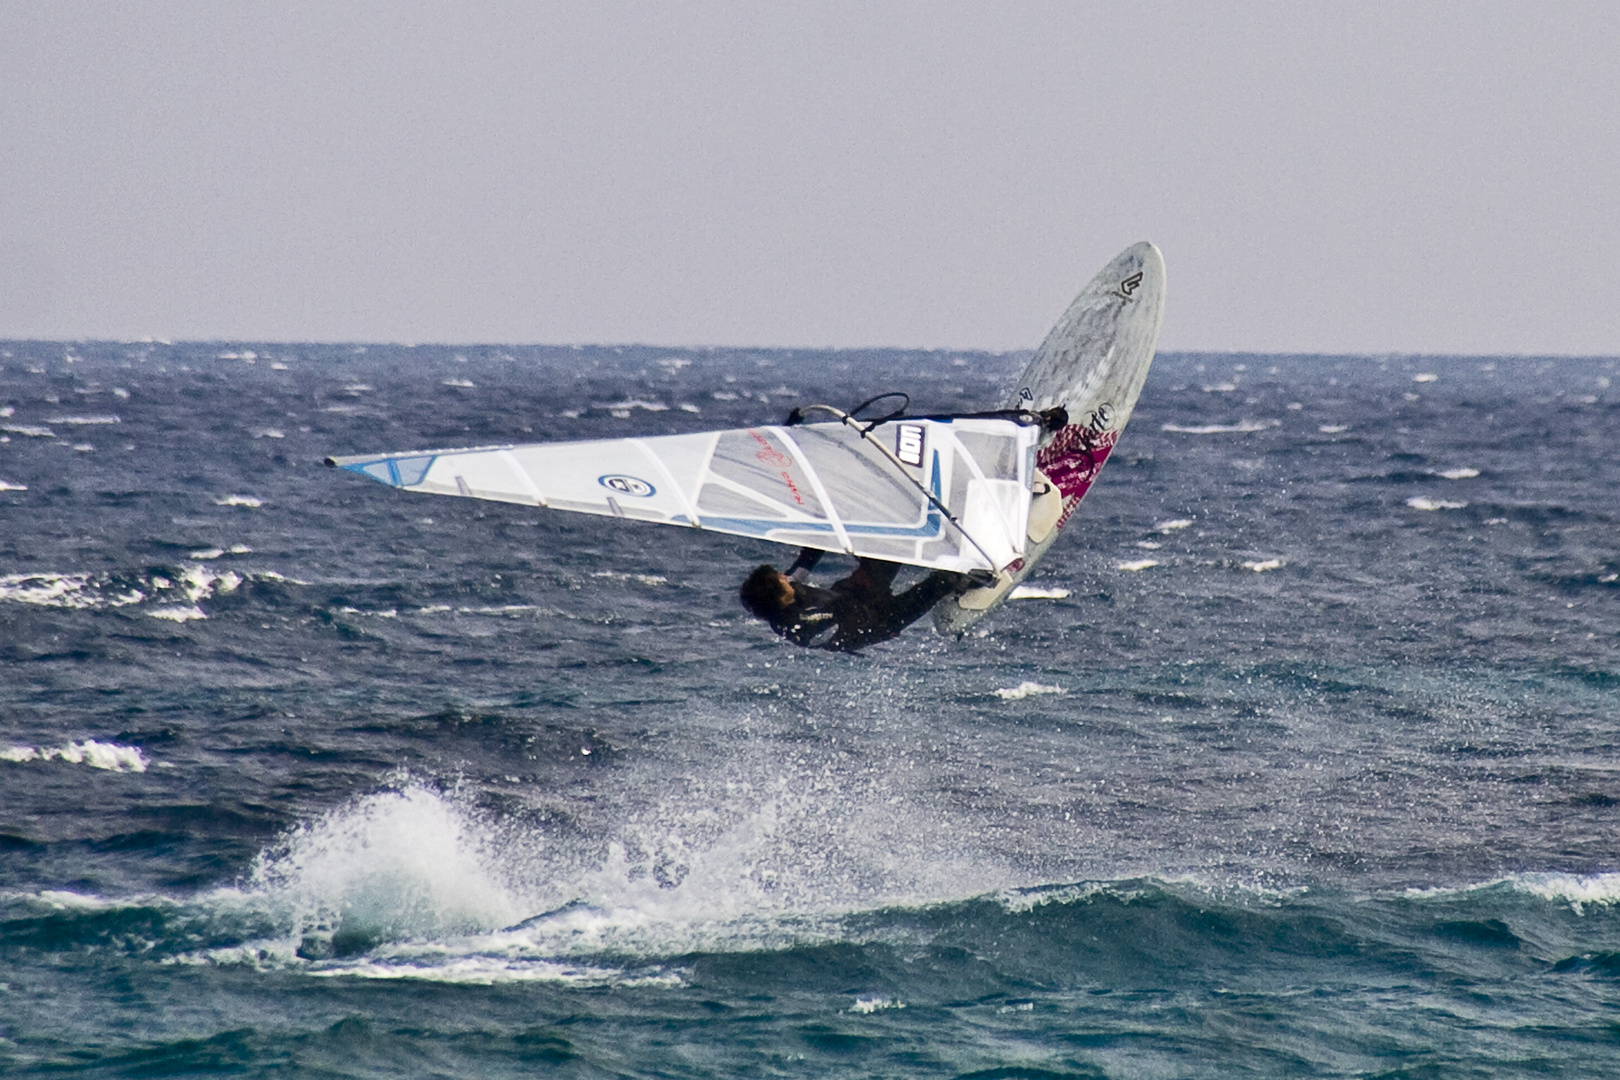 windsurfing @ corse golfo di santa manza